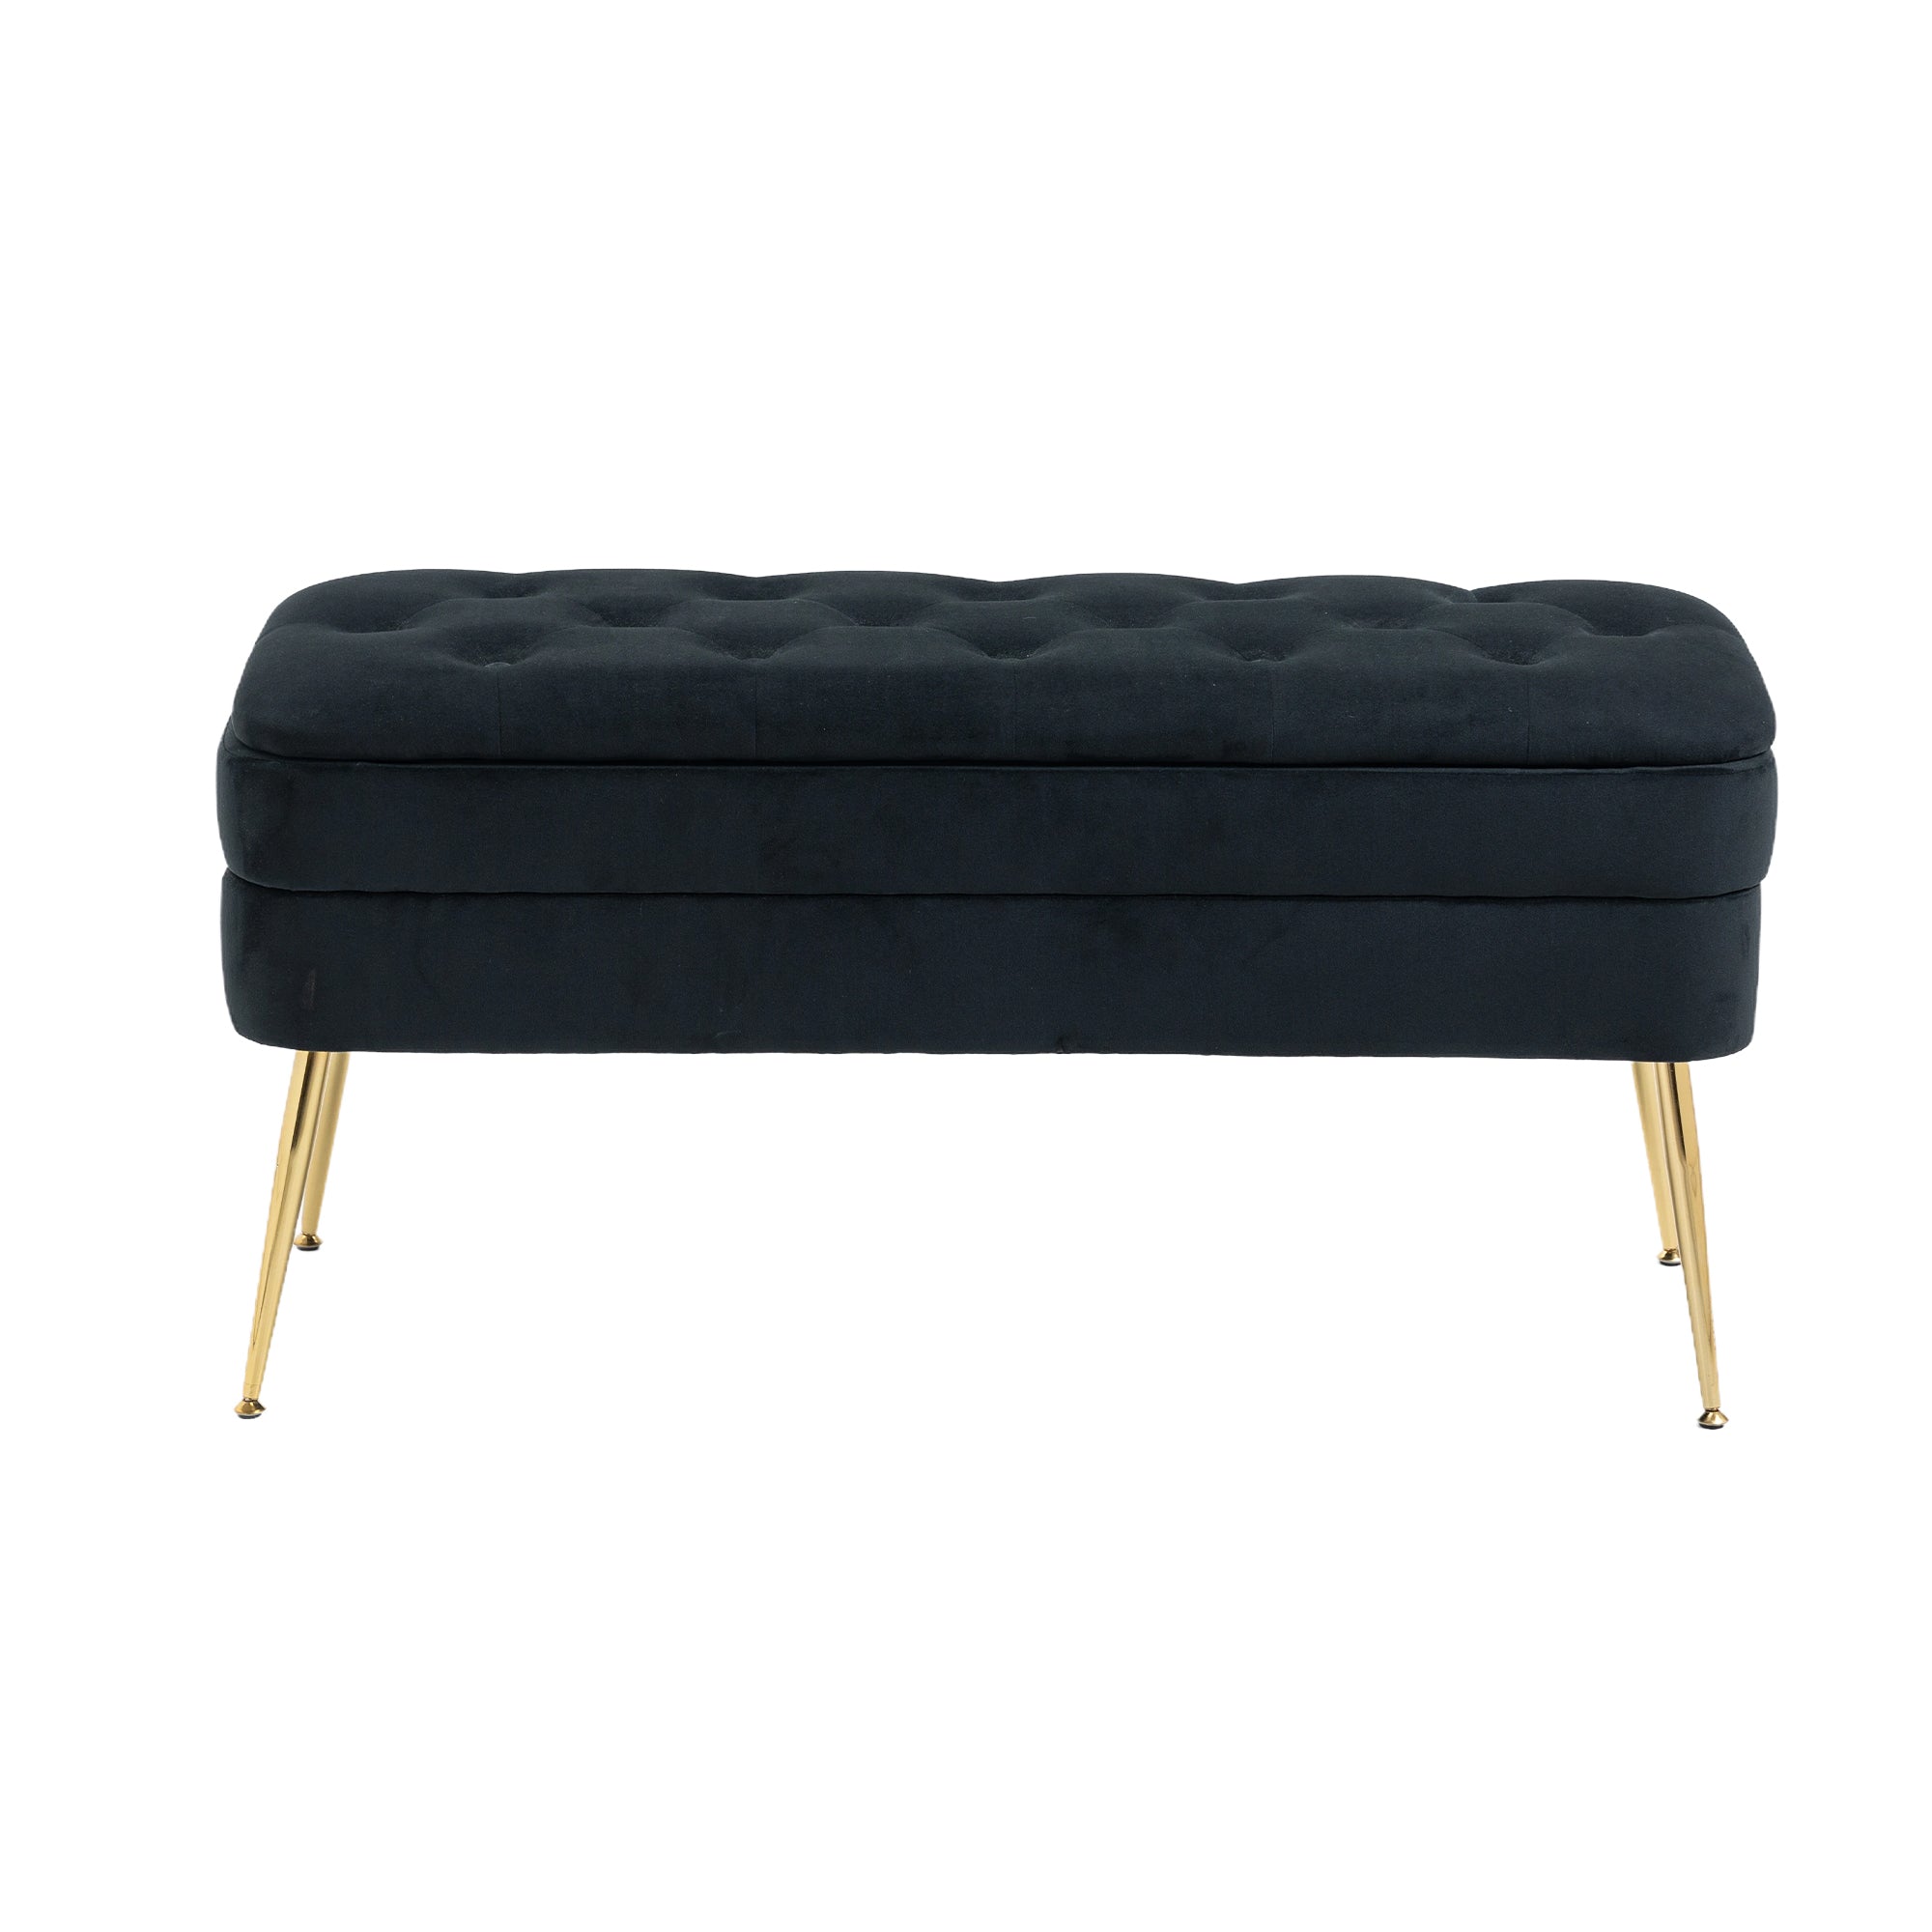 COOLMORE Storage Ottoman,Bedroom End Bench,Upholstered black-velvet